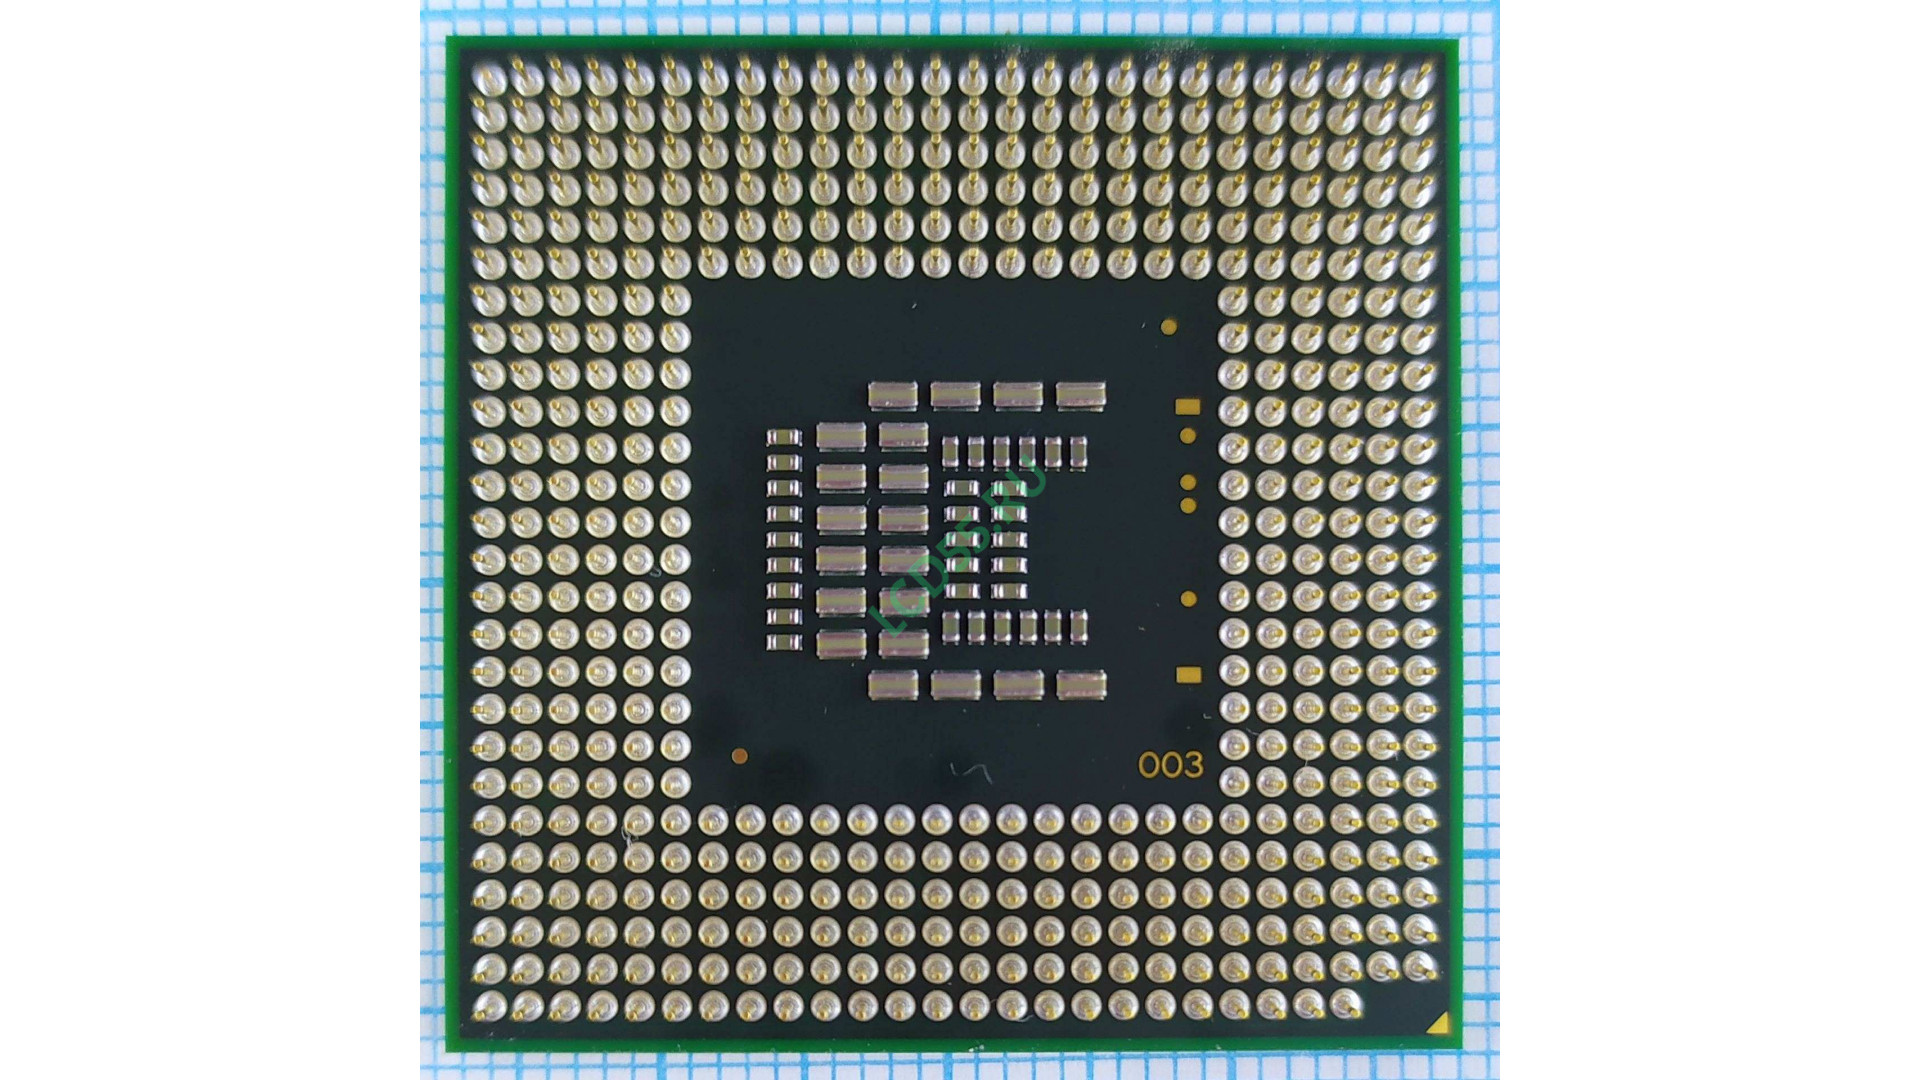 Intel Core 2 Duo P8400 (3M Cache, 2.26 GHz, 1066 MHz FSB) (SLB3R) BGA479, PGA478 1.050V-1.150V